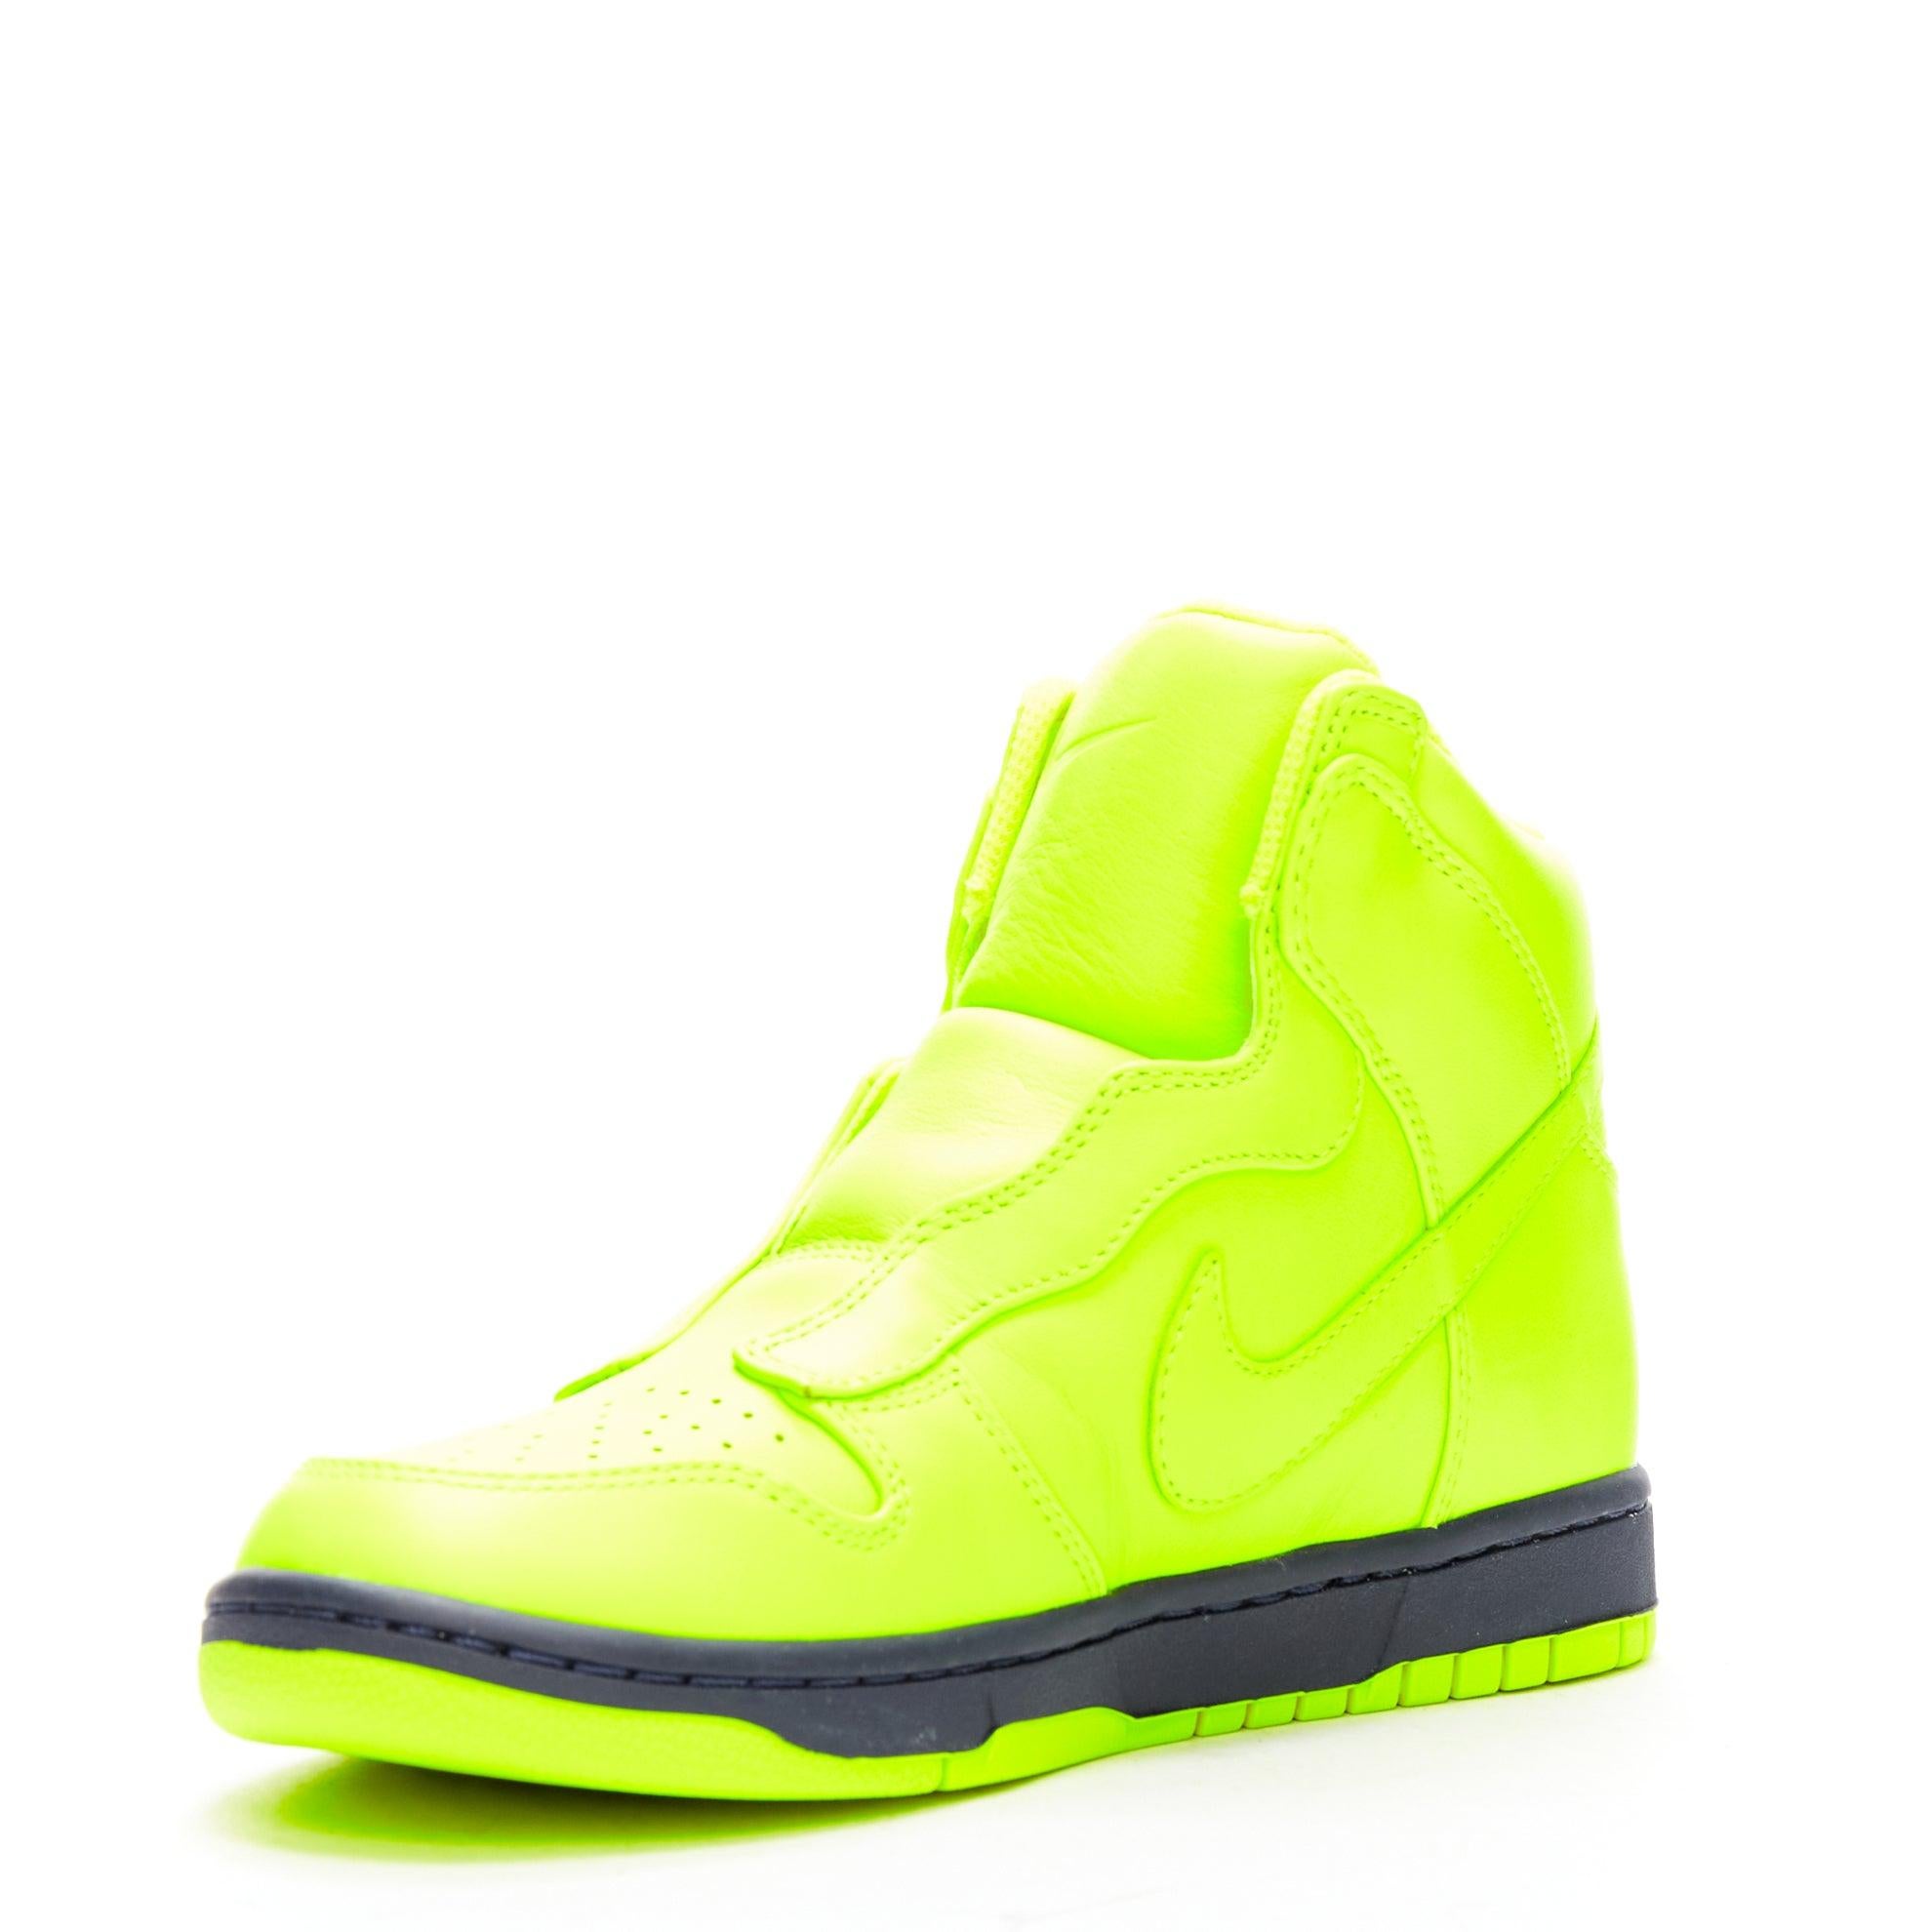 Women's SACAI NIKE NIKELAB Dunk Lux SP Volt neon yellow high top sneakers US8 EU38